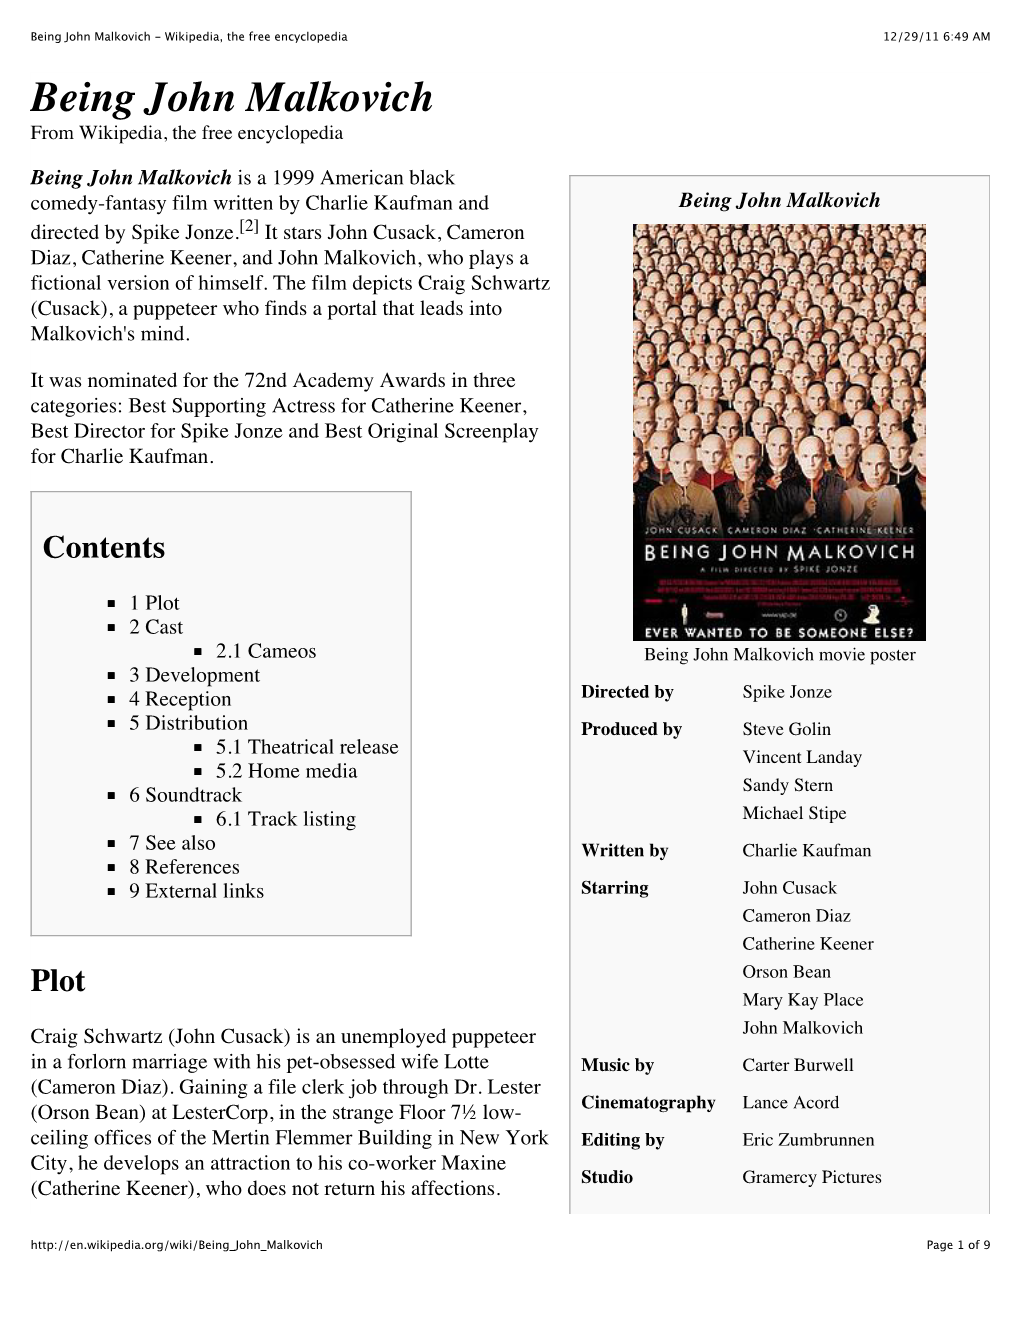 Being John Malkovich - Wikipedia, the Free Encyclopedia 12/29/11 6:49 AM Being John Malkovich from Wikipedia, the Free Encyclopedia